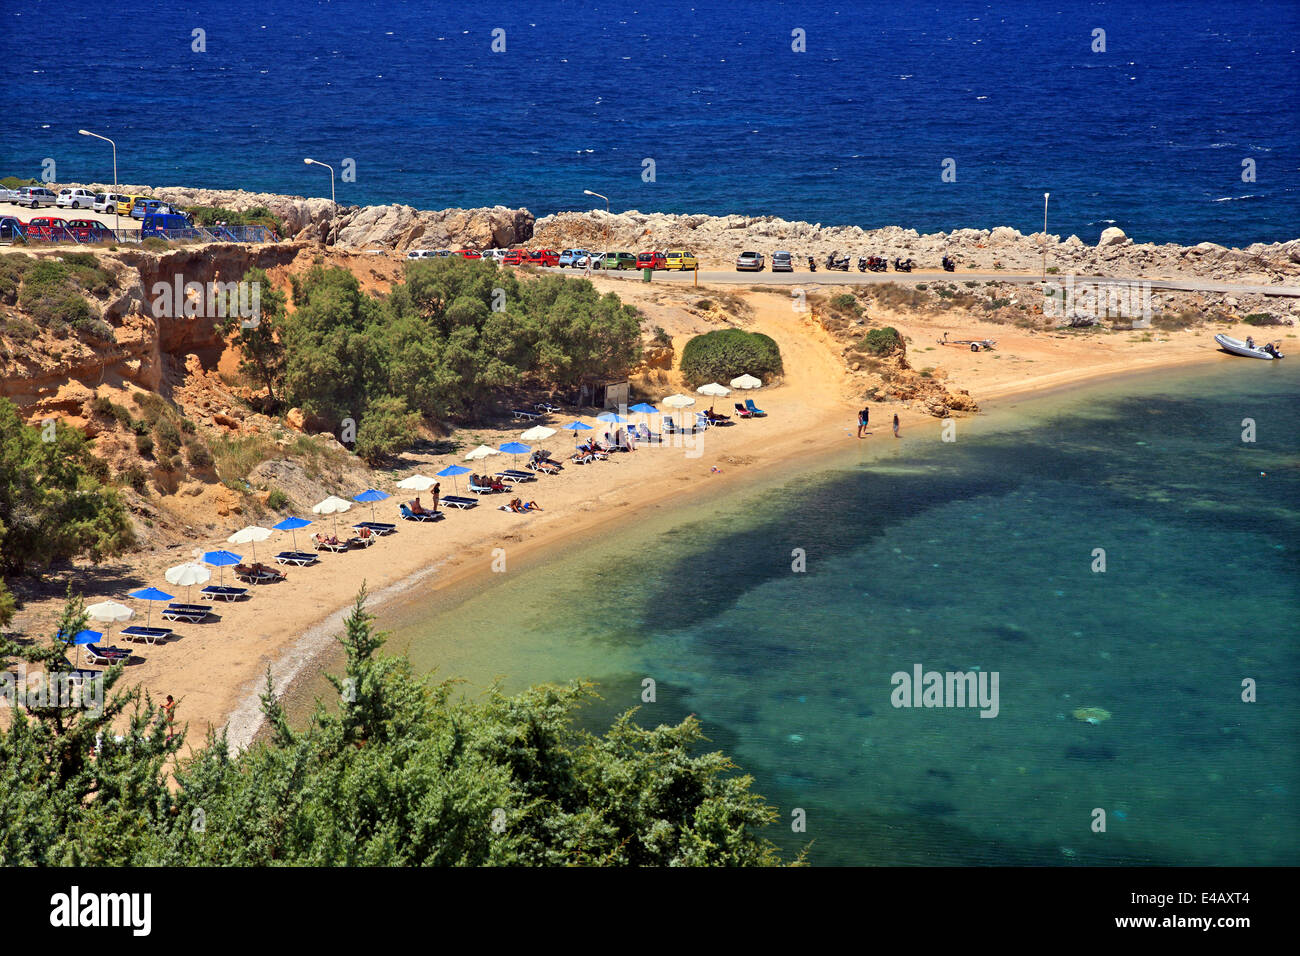 Beach at Limnionas (or 'Limionas'), Kefalos area, Kos island, Dodecanese, Aegean sea, Greece. Stock Photo